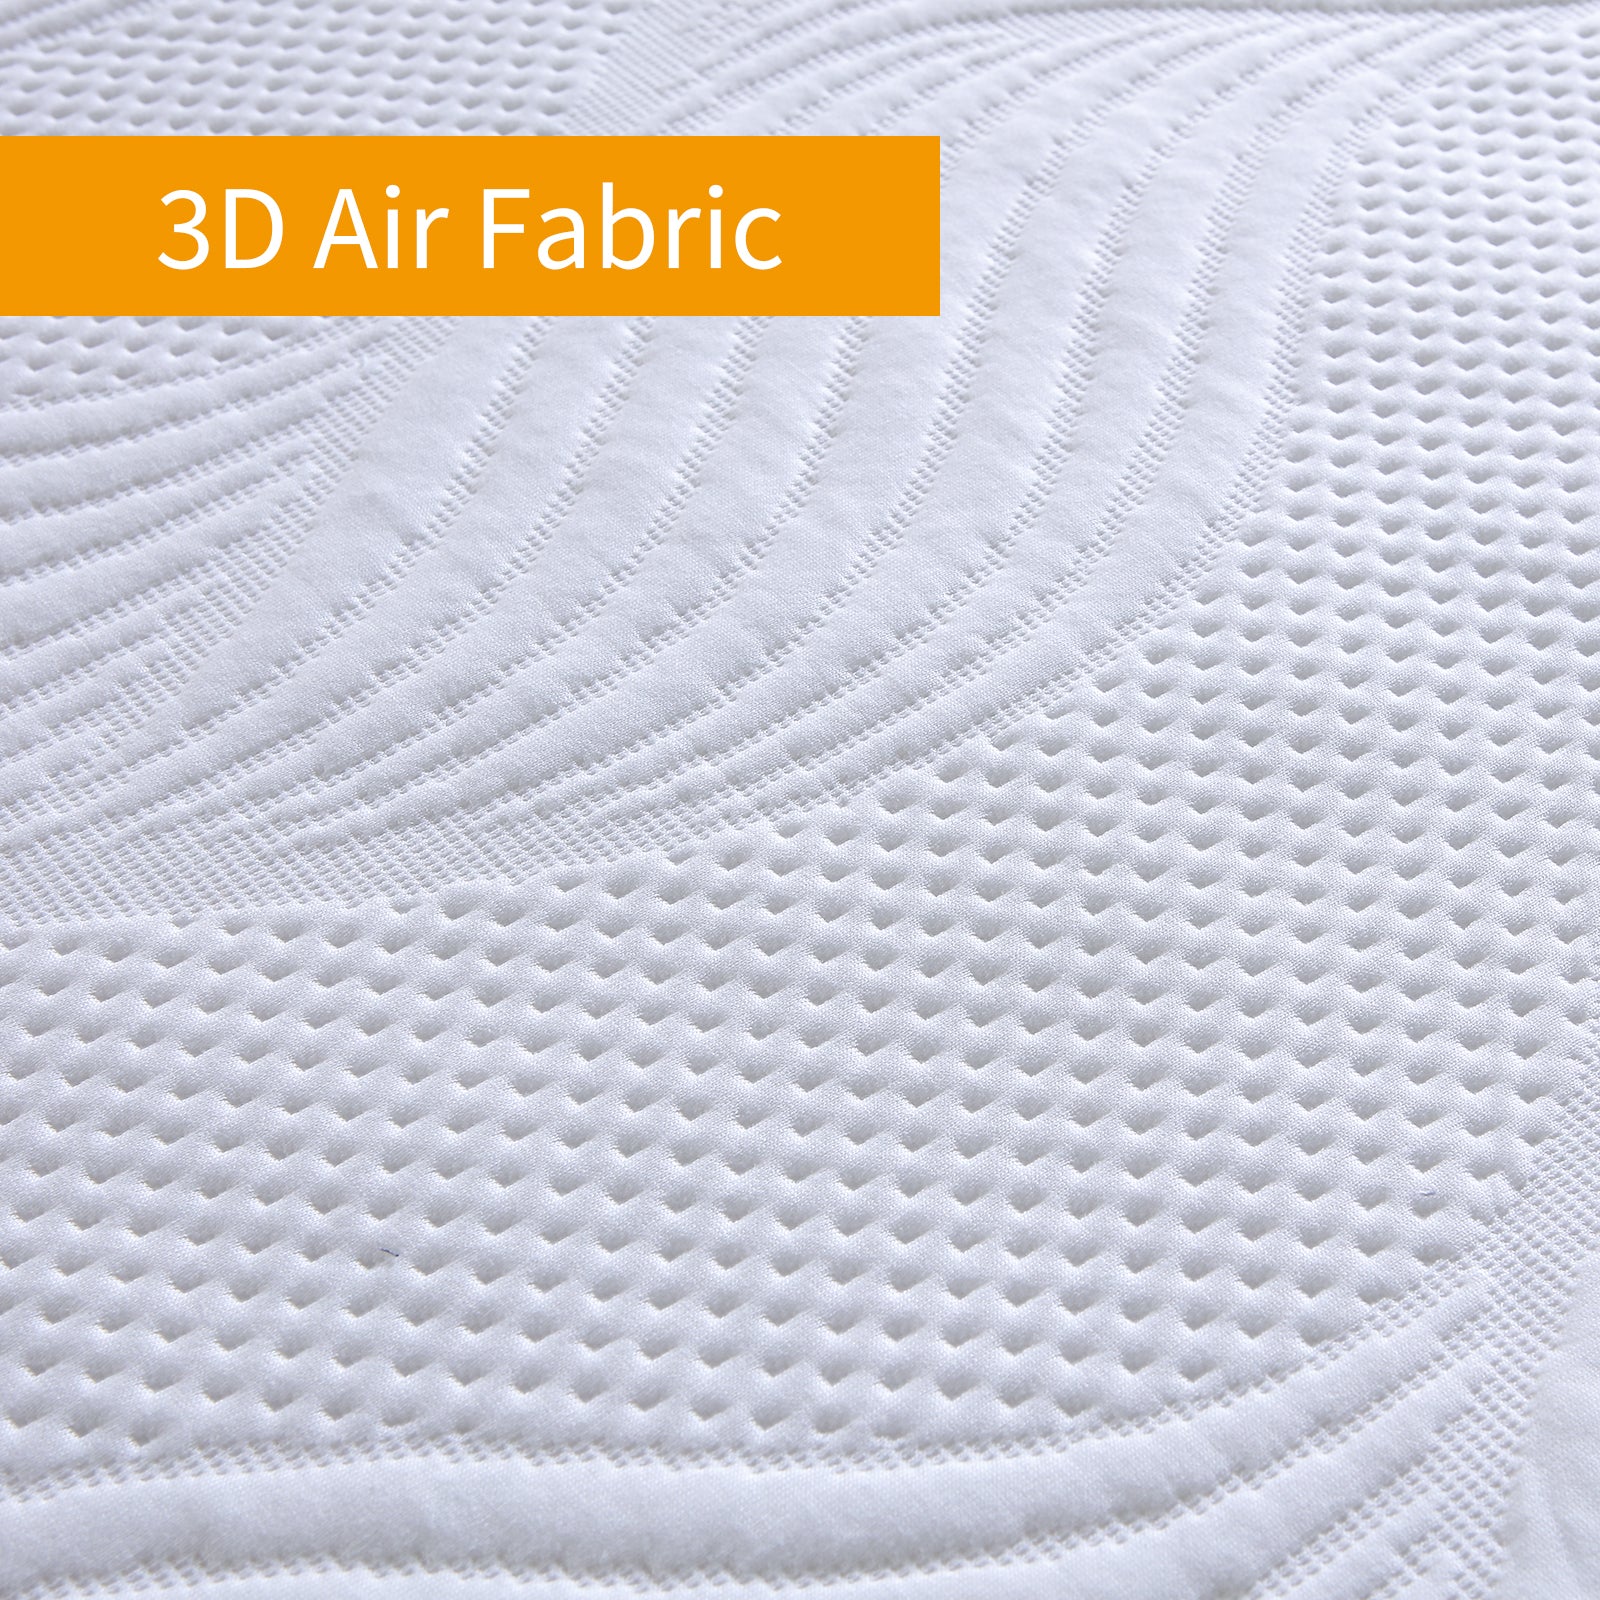 Suilong Waterproof Mattress Protector, 3D Air Fabric Mattress Pad Cover, Up to 8''-15''